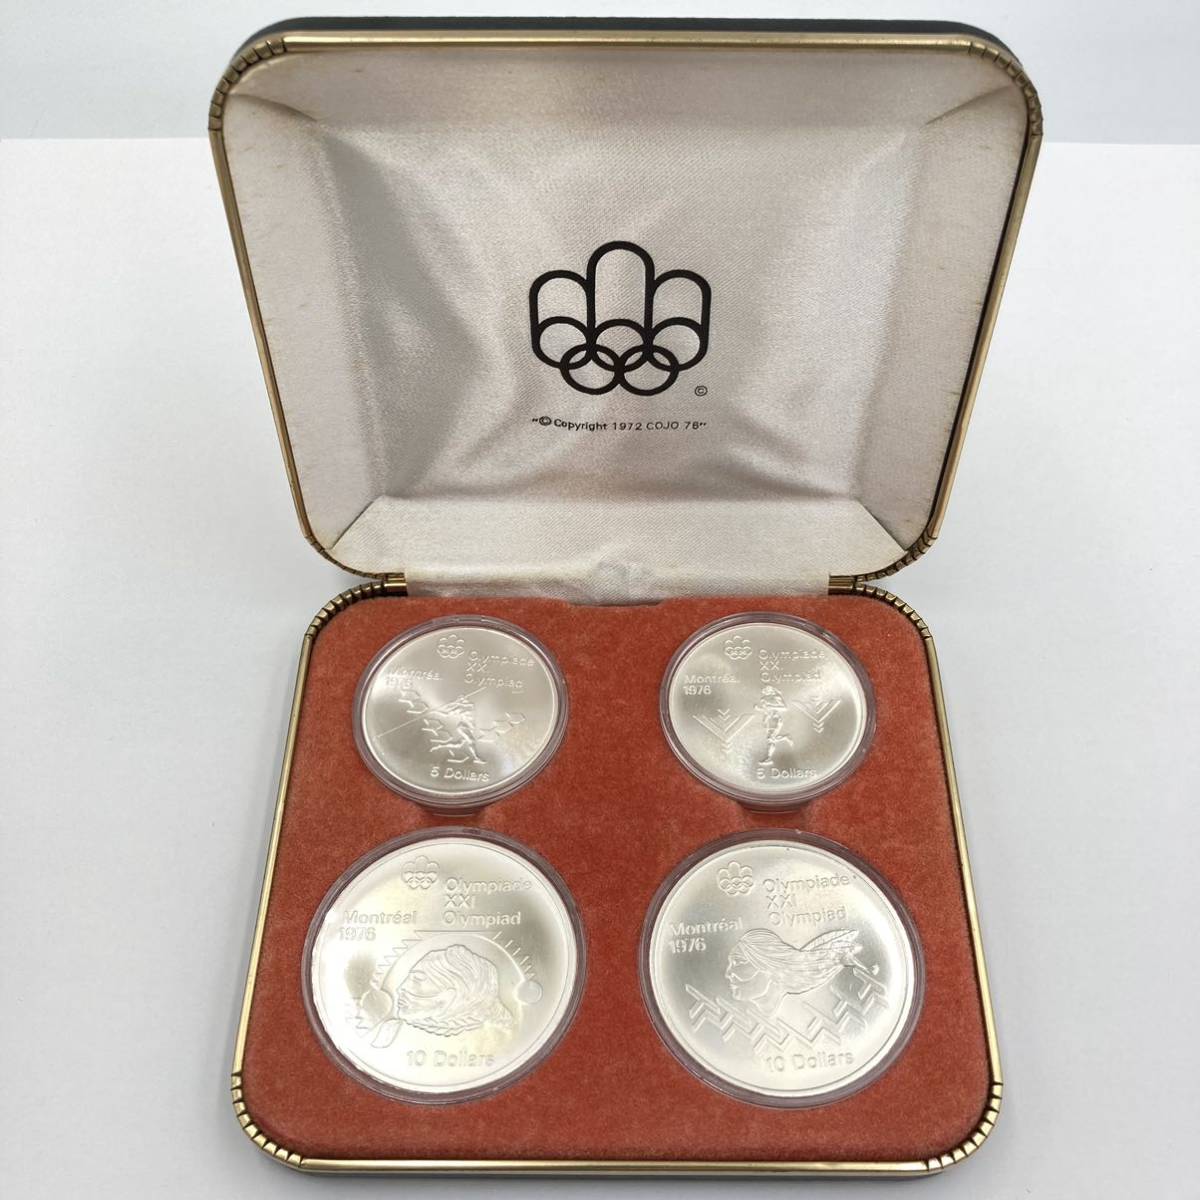 Yahoo!オークション -「モントリオールオリンピック 記念銀貨」の落札